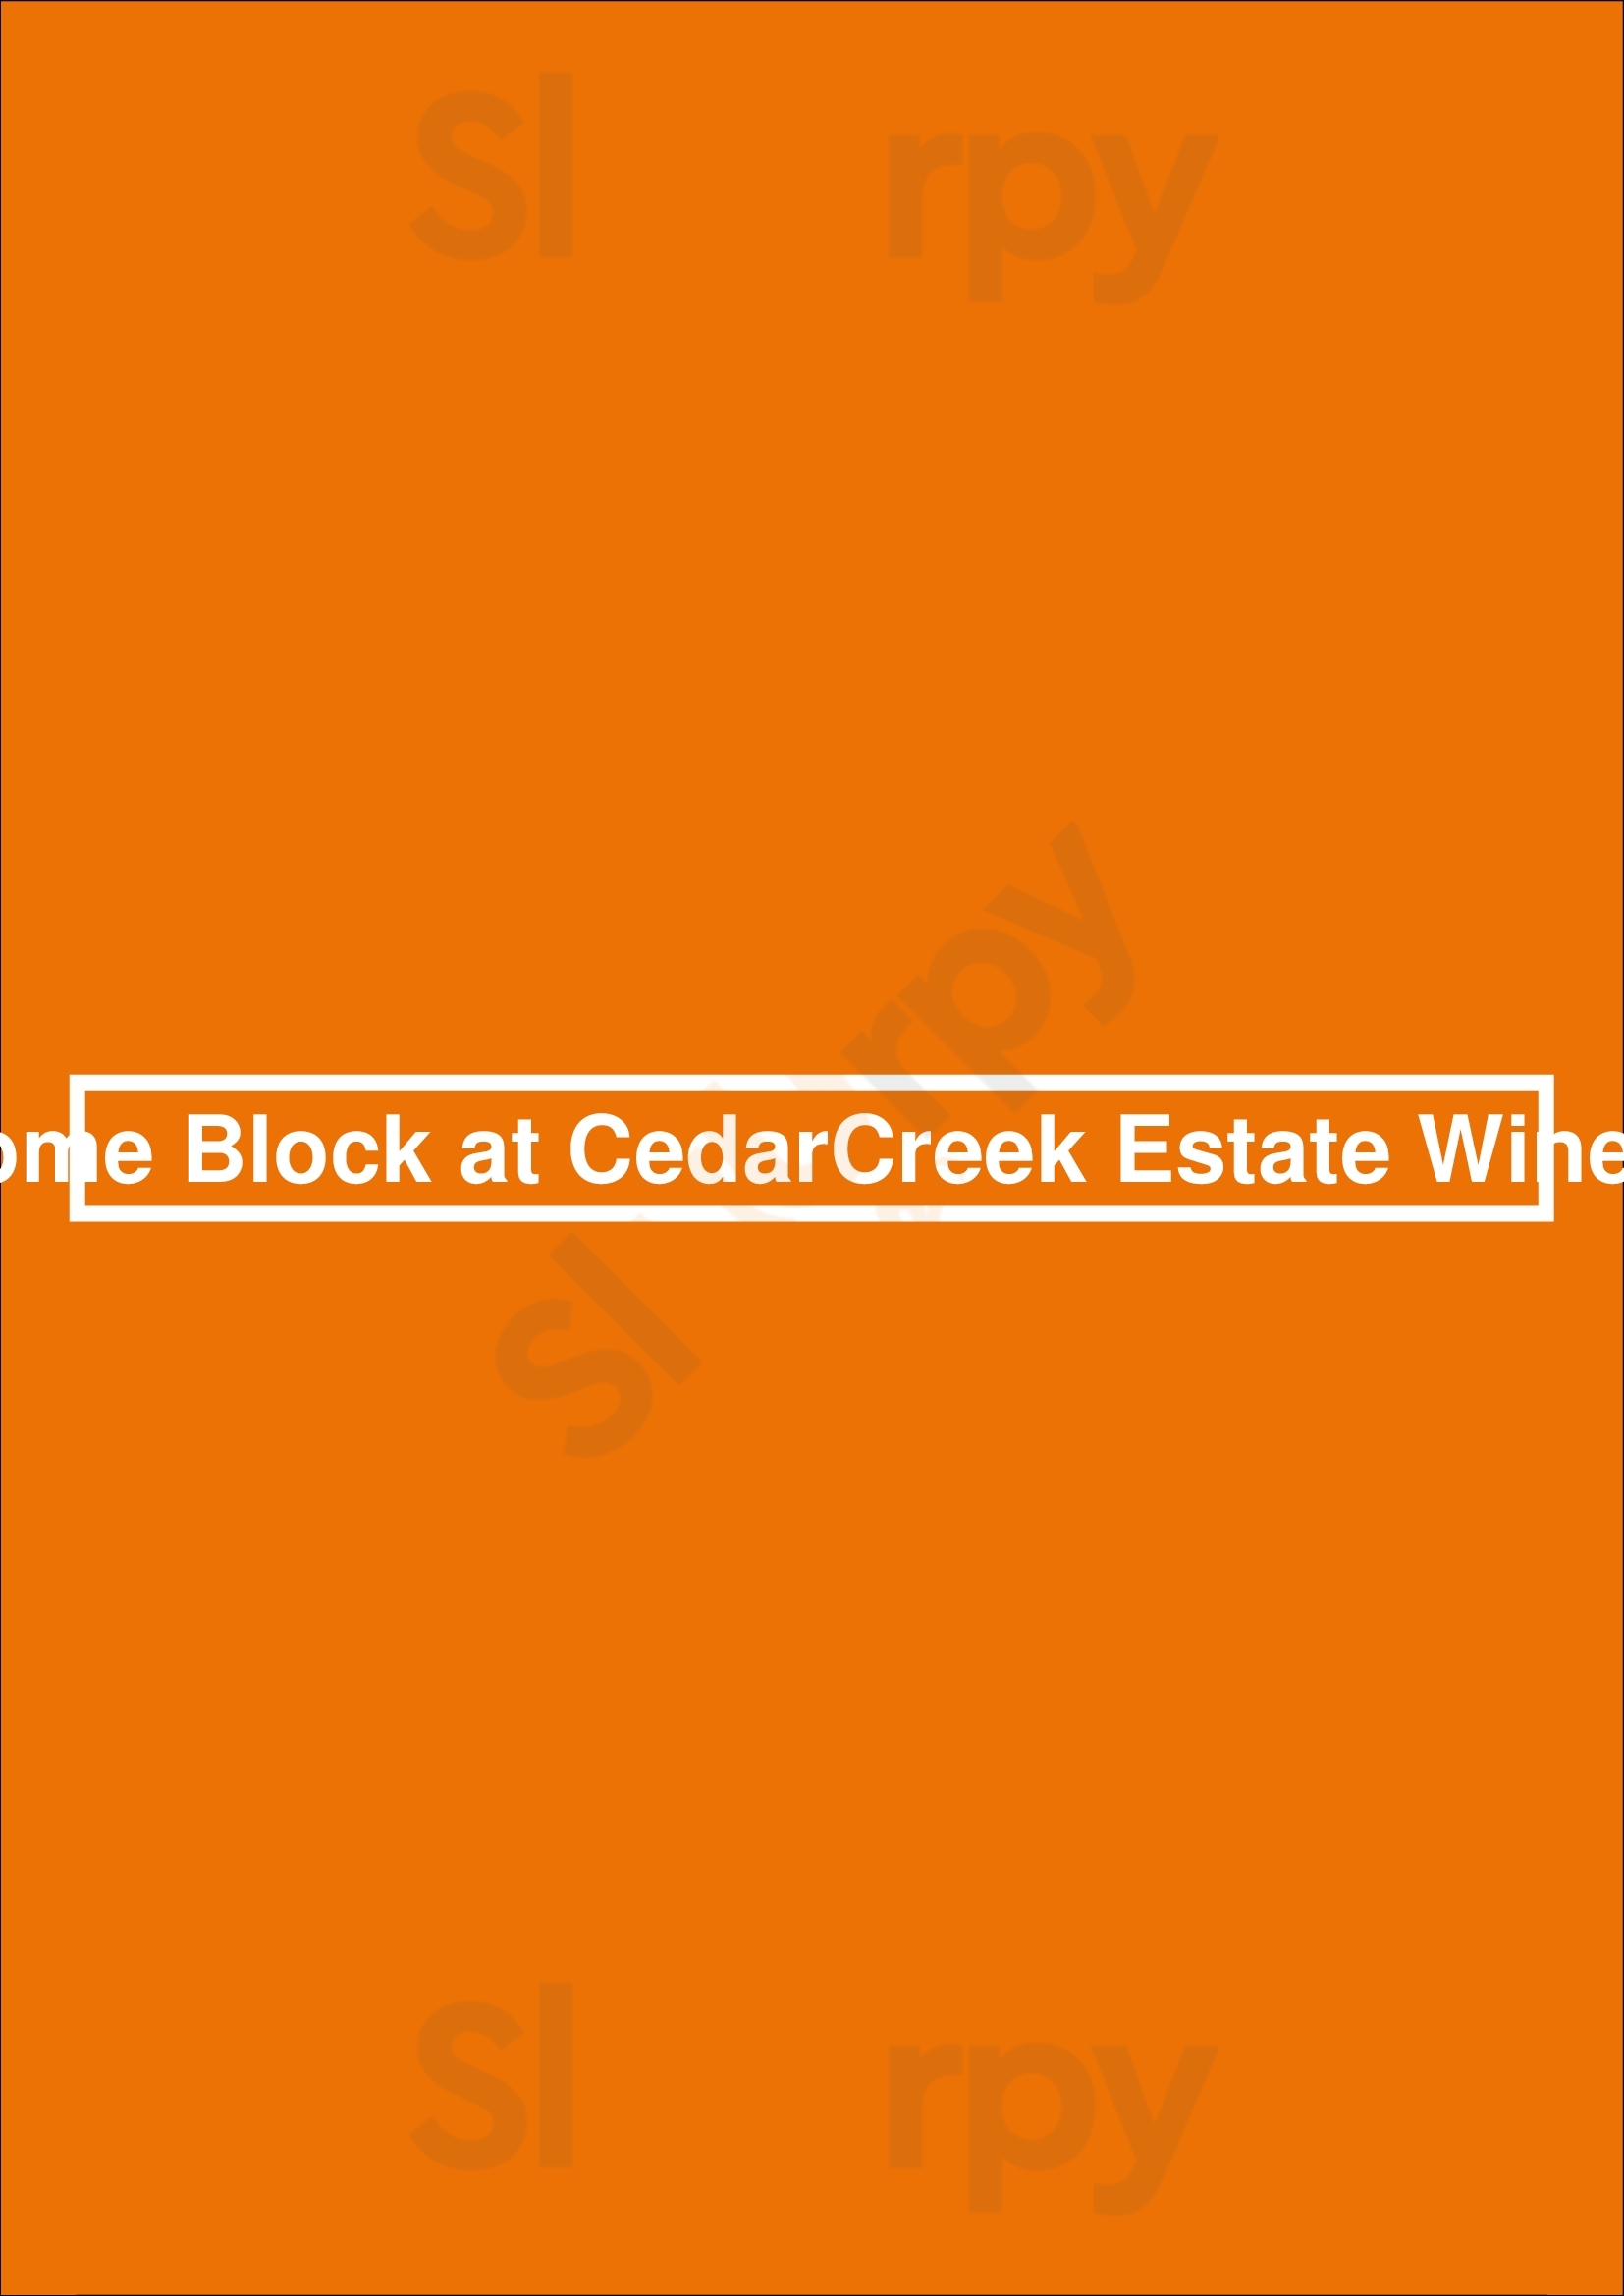 Home Block At Cedarcreek Estate Winery Kelowna Menu - 1